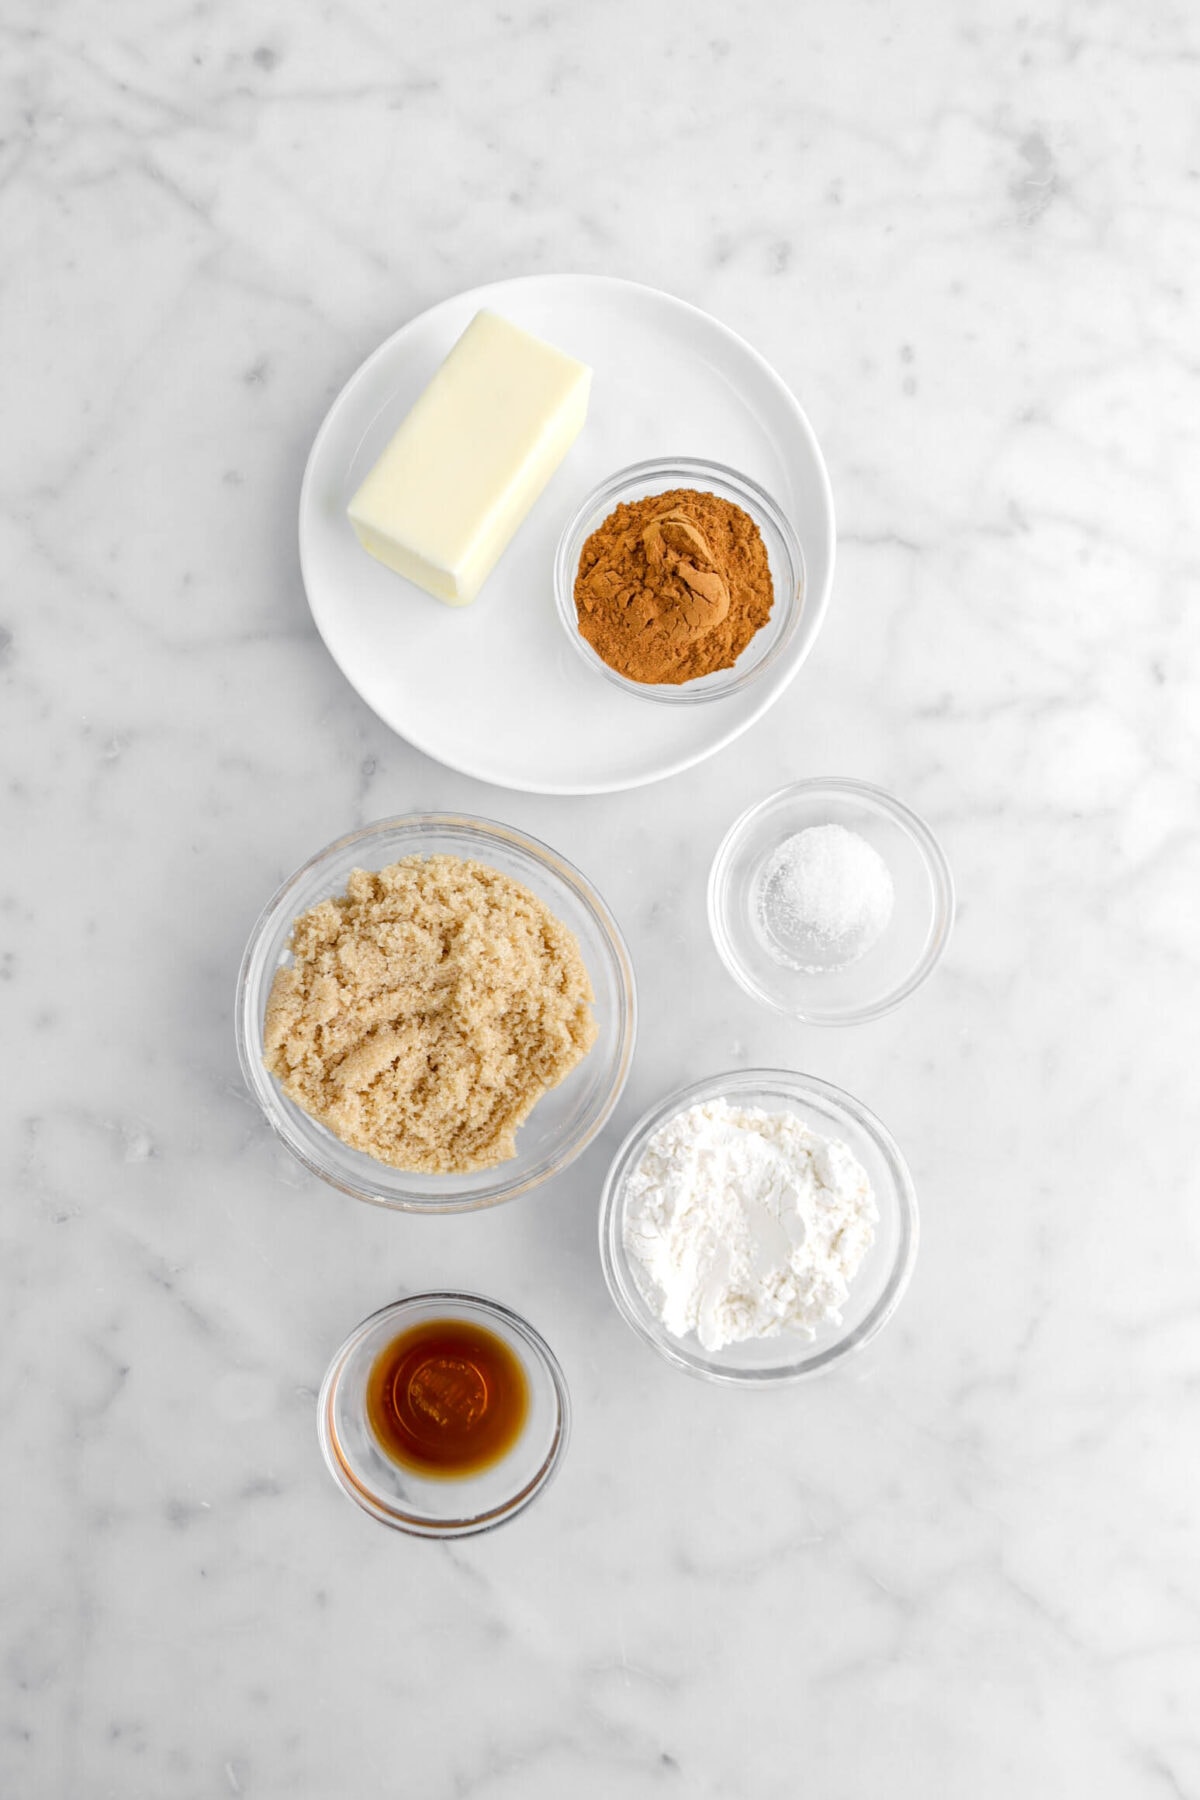 butter, cinnamon, salt, brown sugar, flour, and vanilla on marble surface.